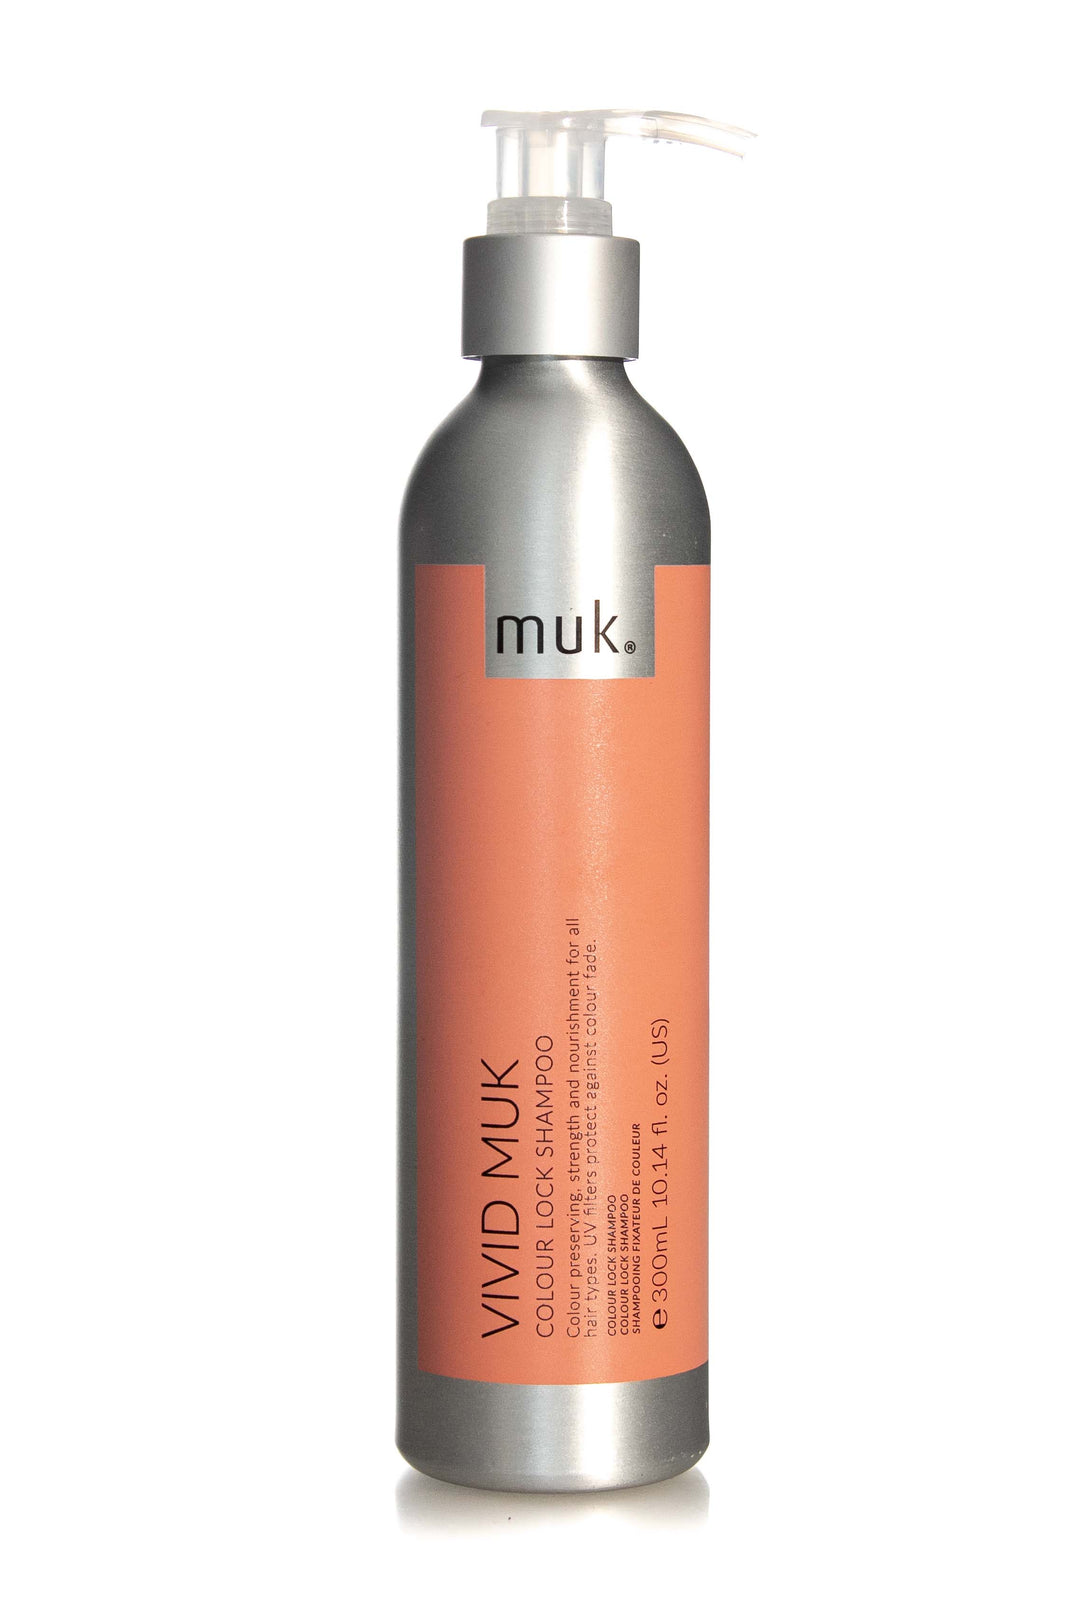 MUK VIVID Colour Lock Shampoo | Various Sizes